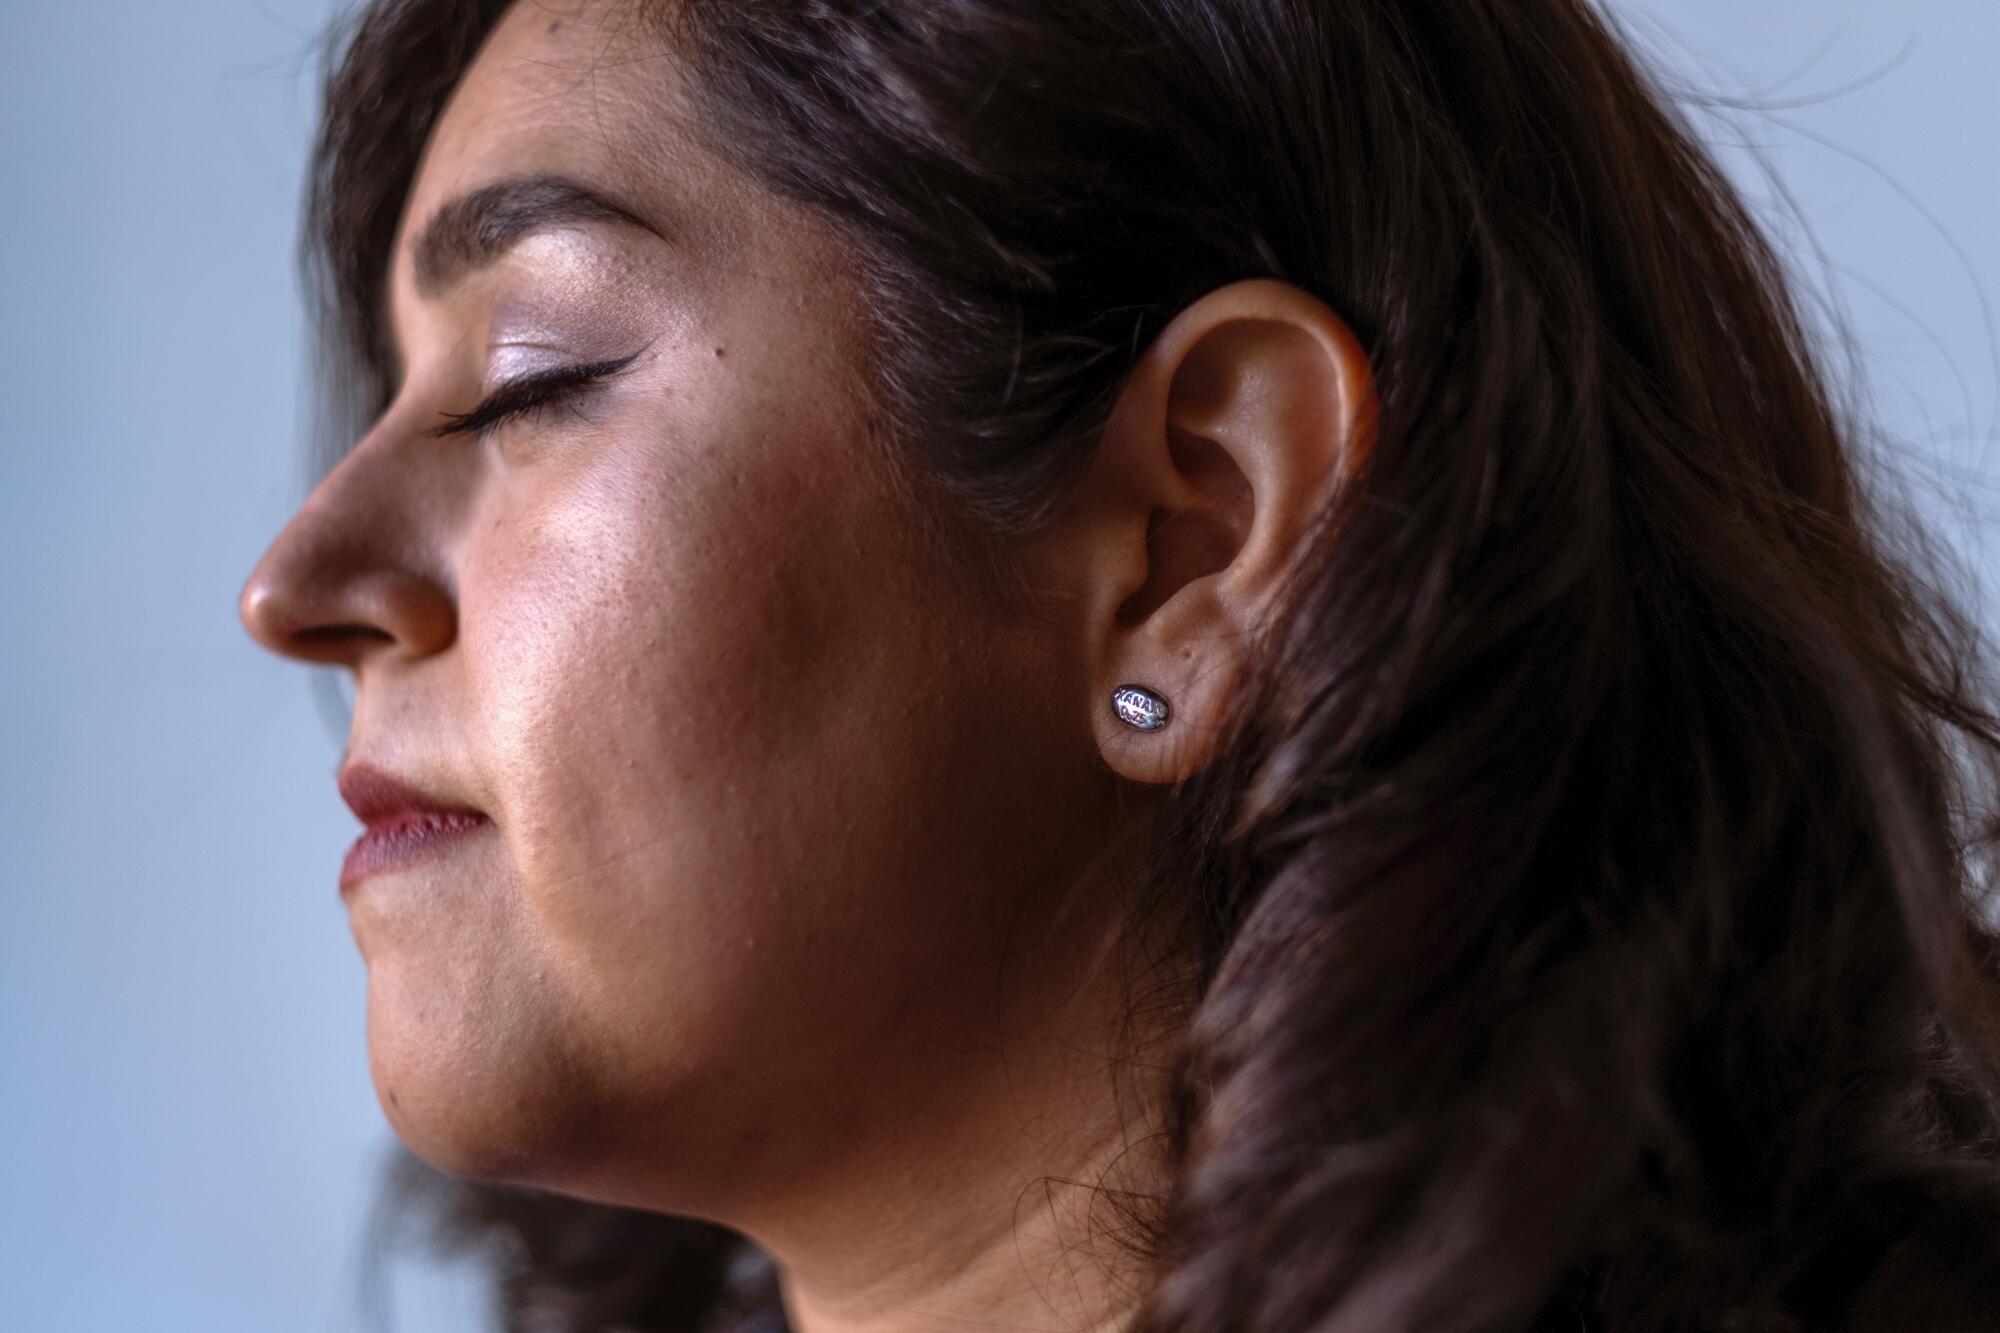 A portrait of entrepreneur Rosa Valdes wearing her Xanax earrings.